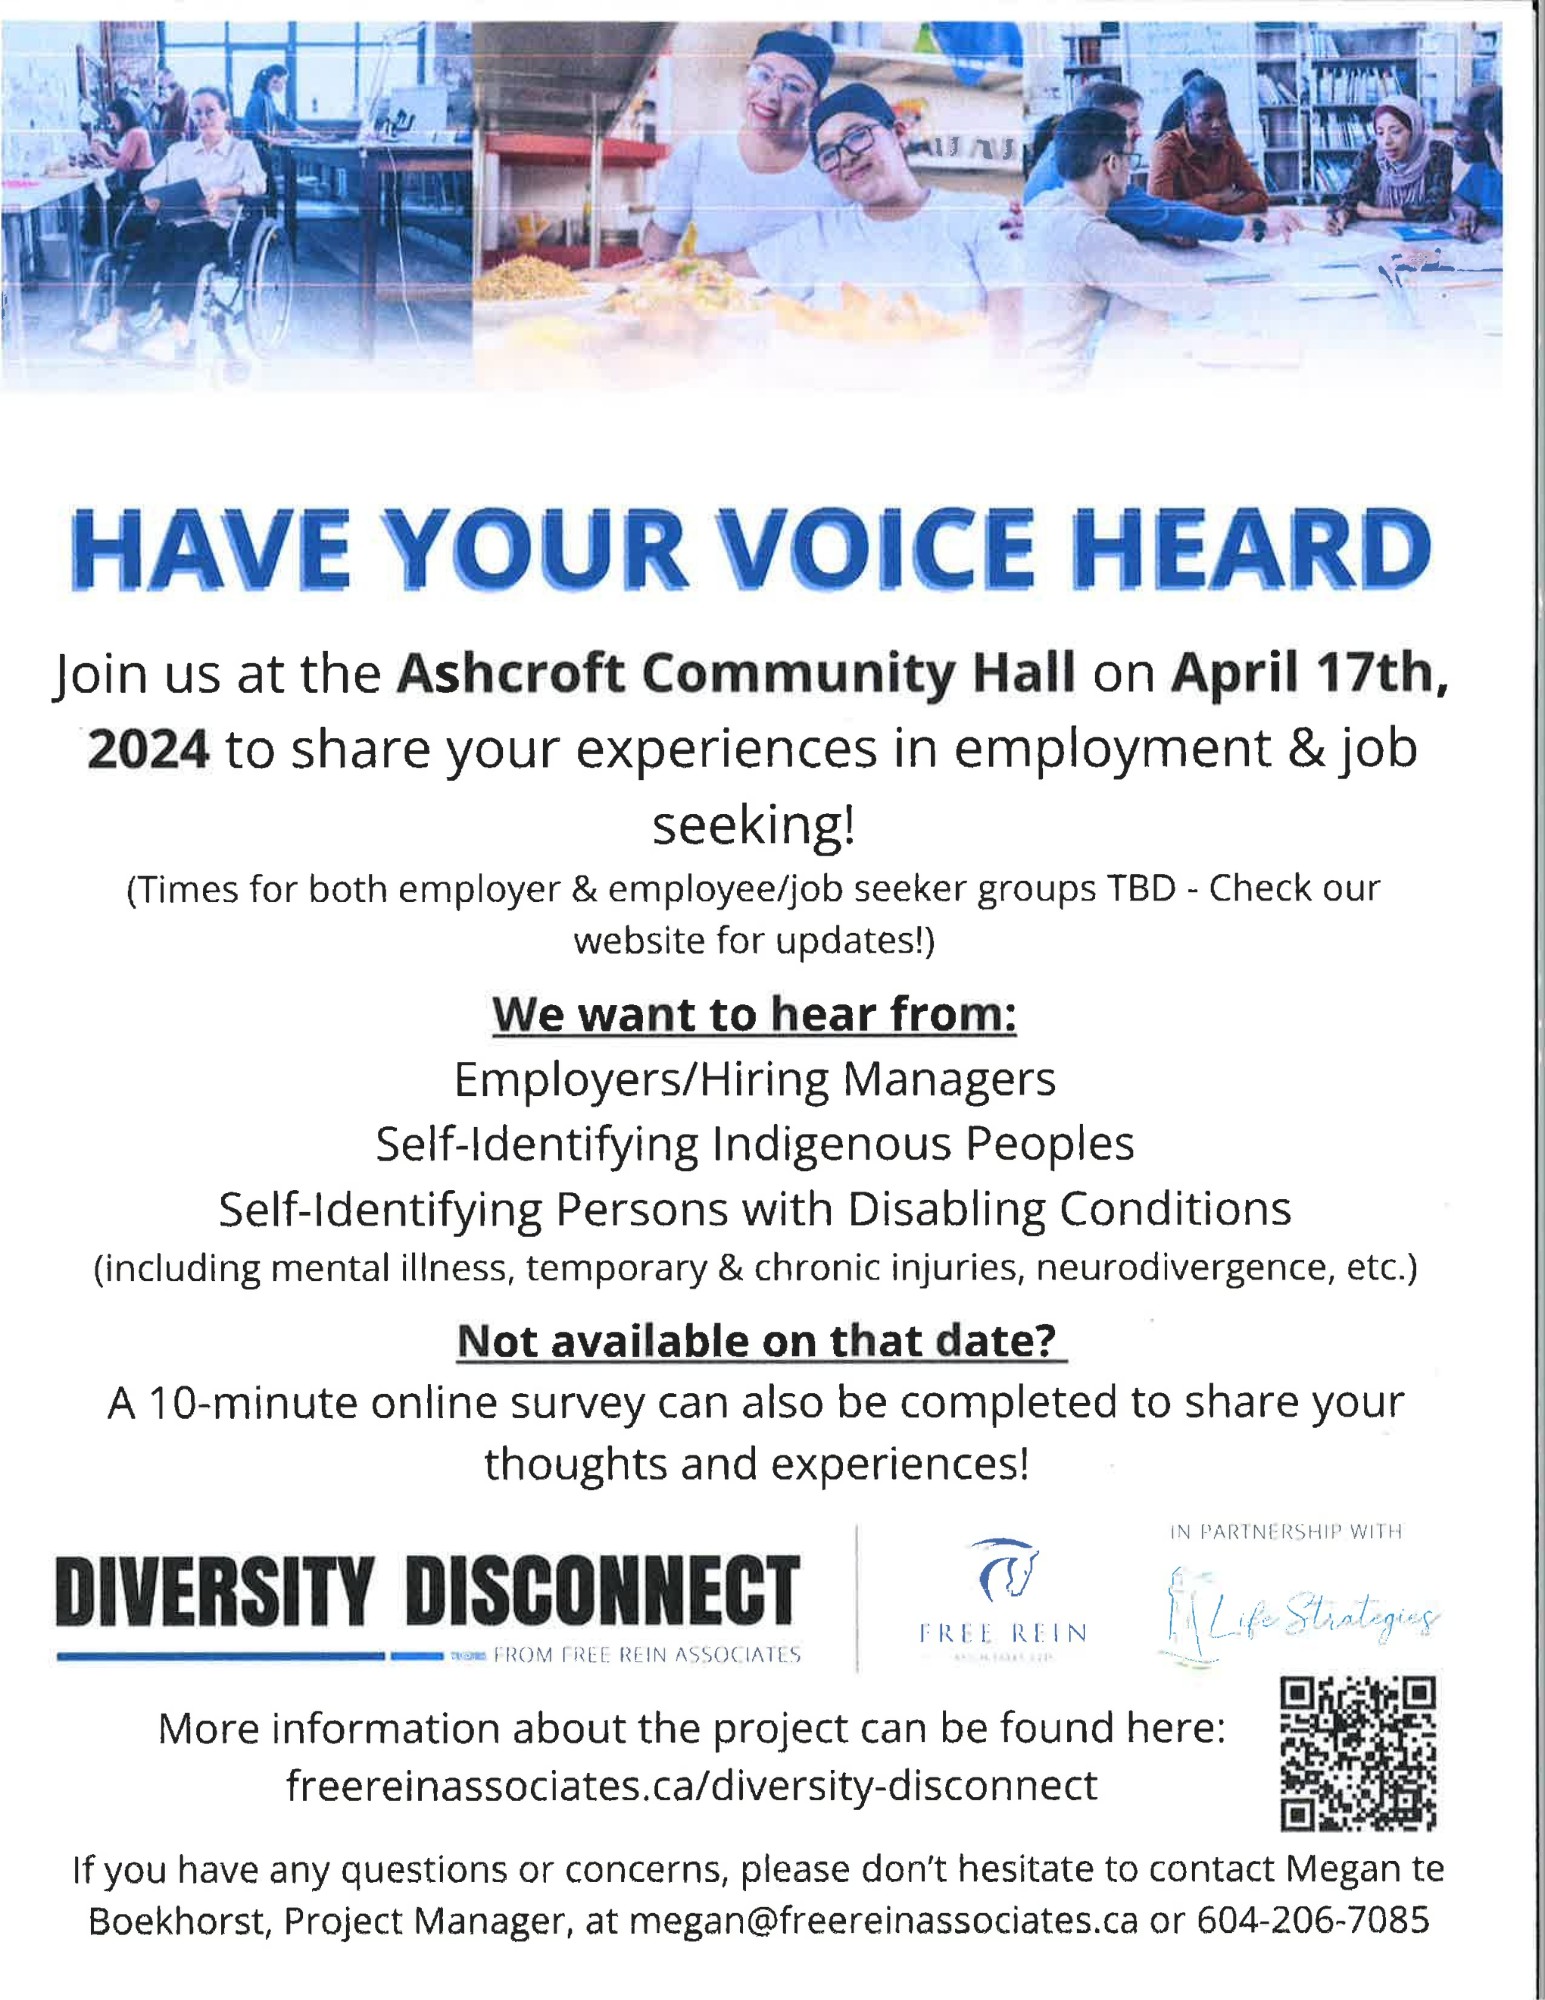 Diversity Disconnect - Have Your Voice Heard